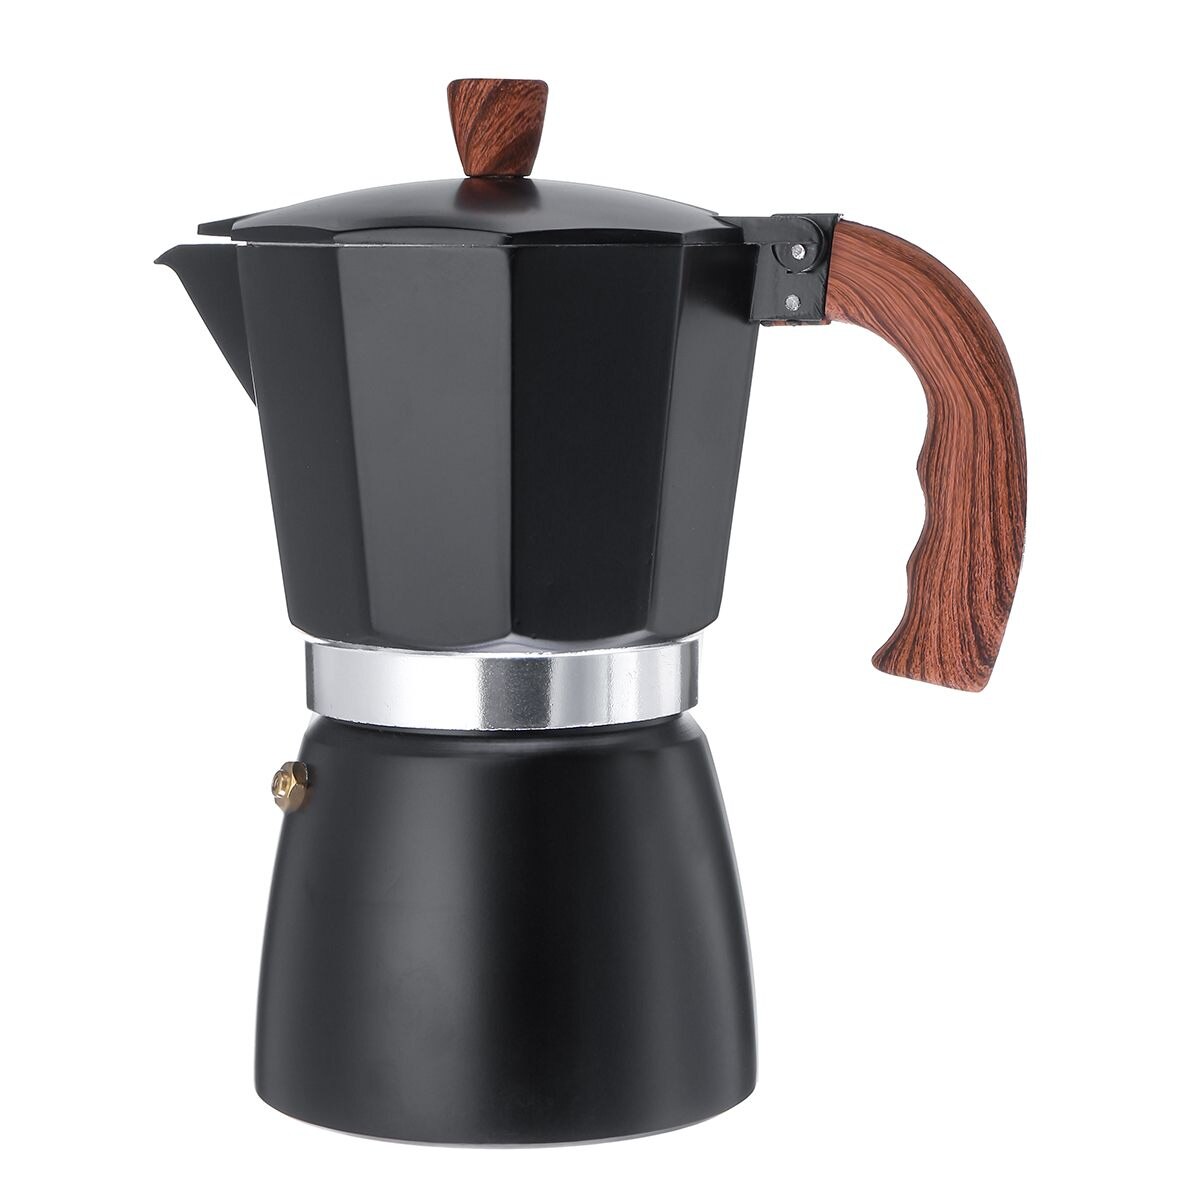 150ml 300ml kaffemaskine aluminium mokka espresso percolator pot kaffemaskine moka pot stovetop kaffemaskine: 300ml sorte